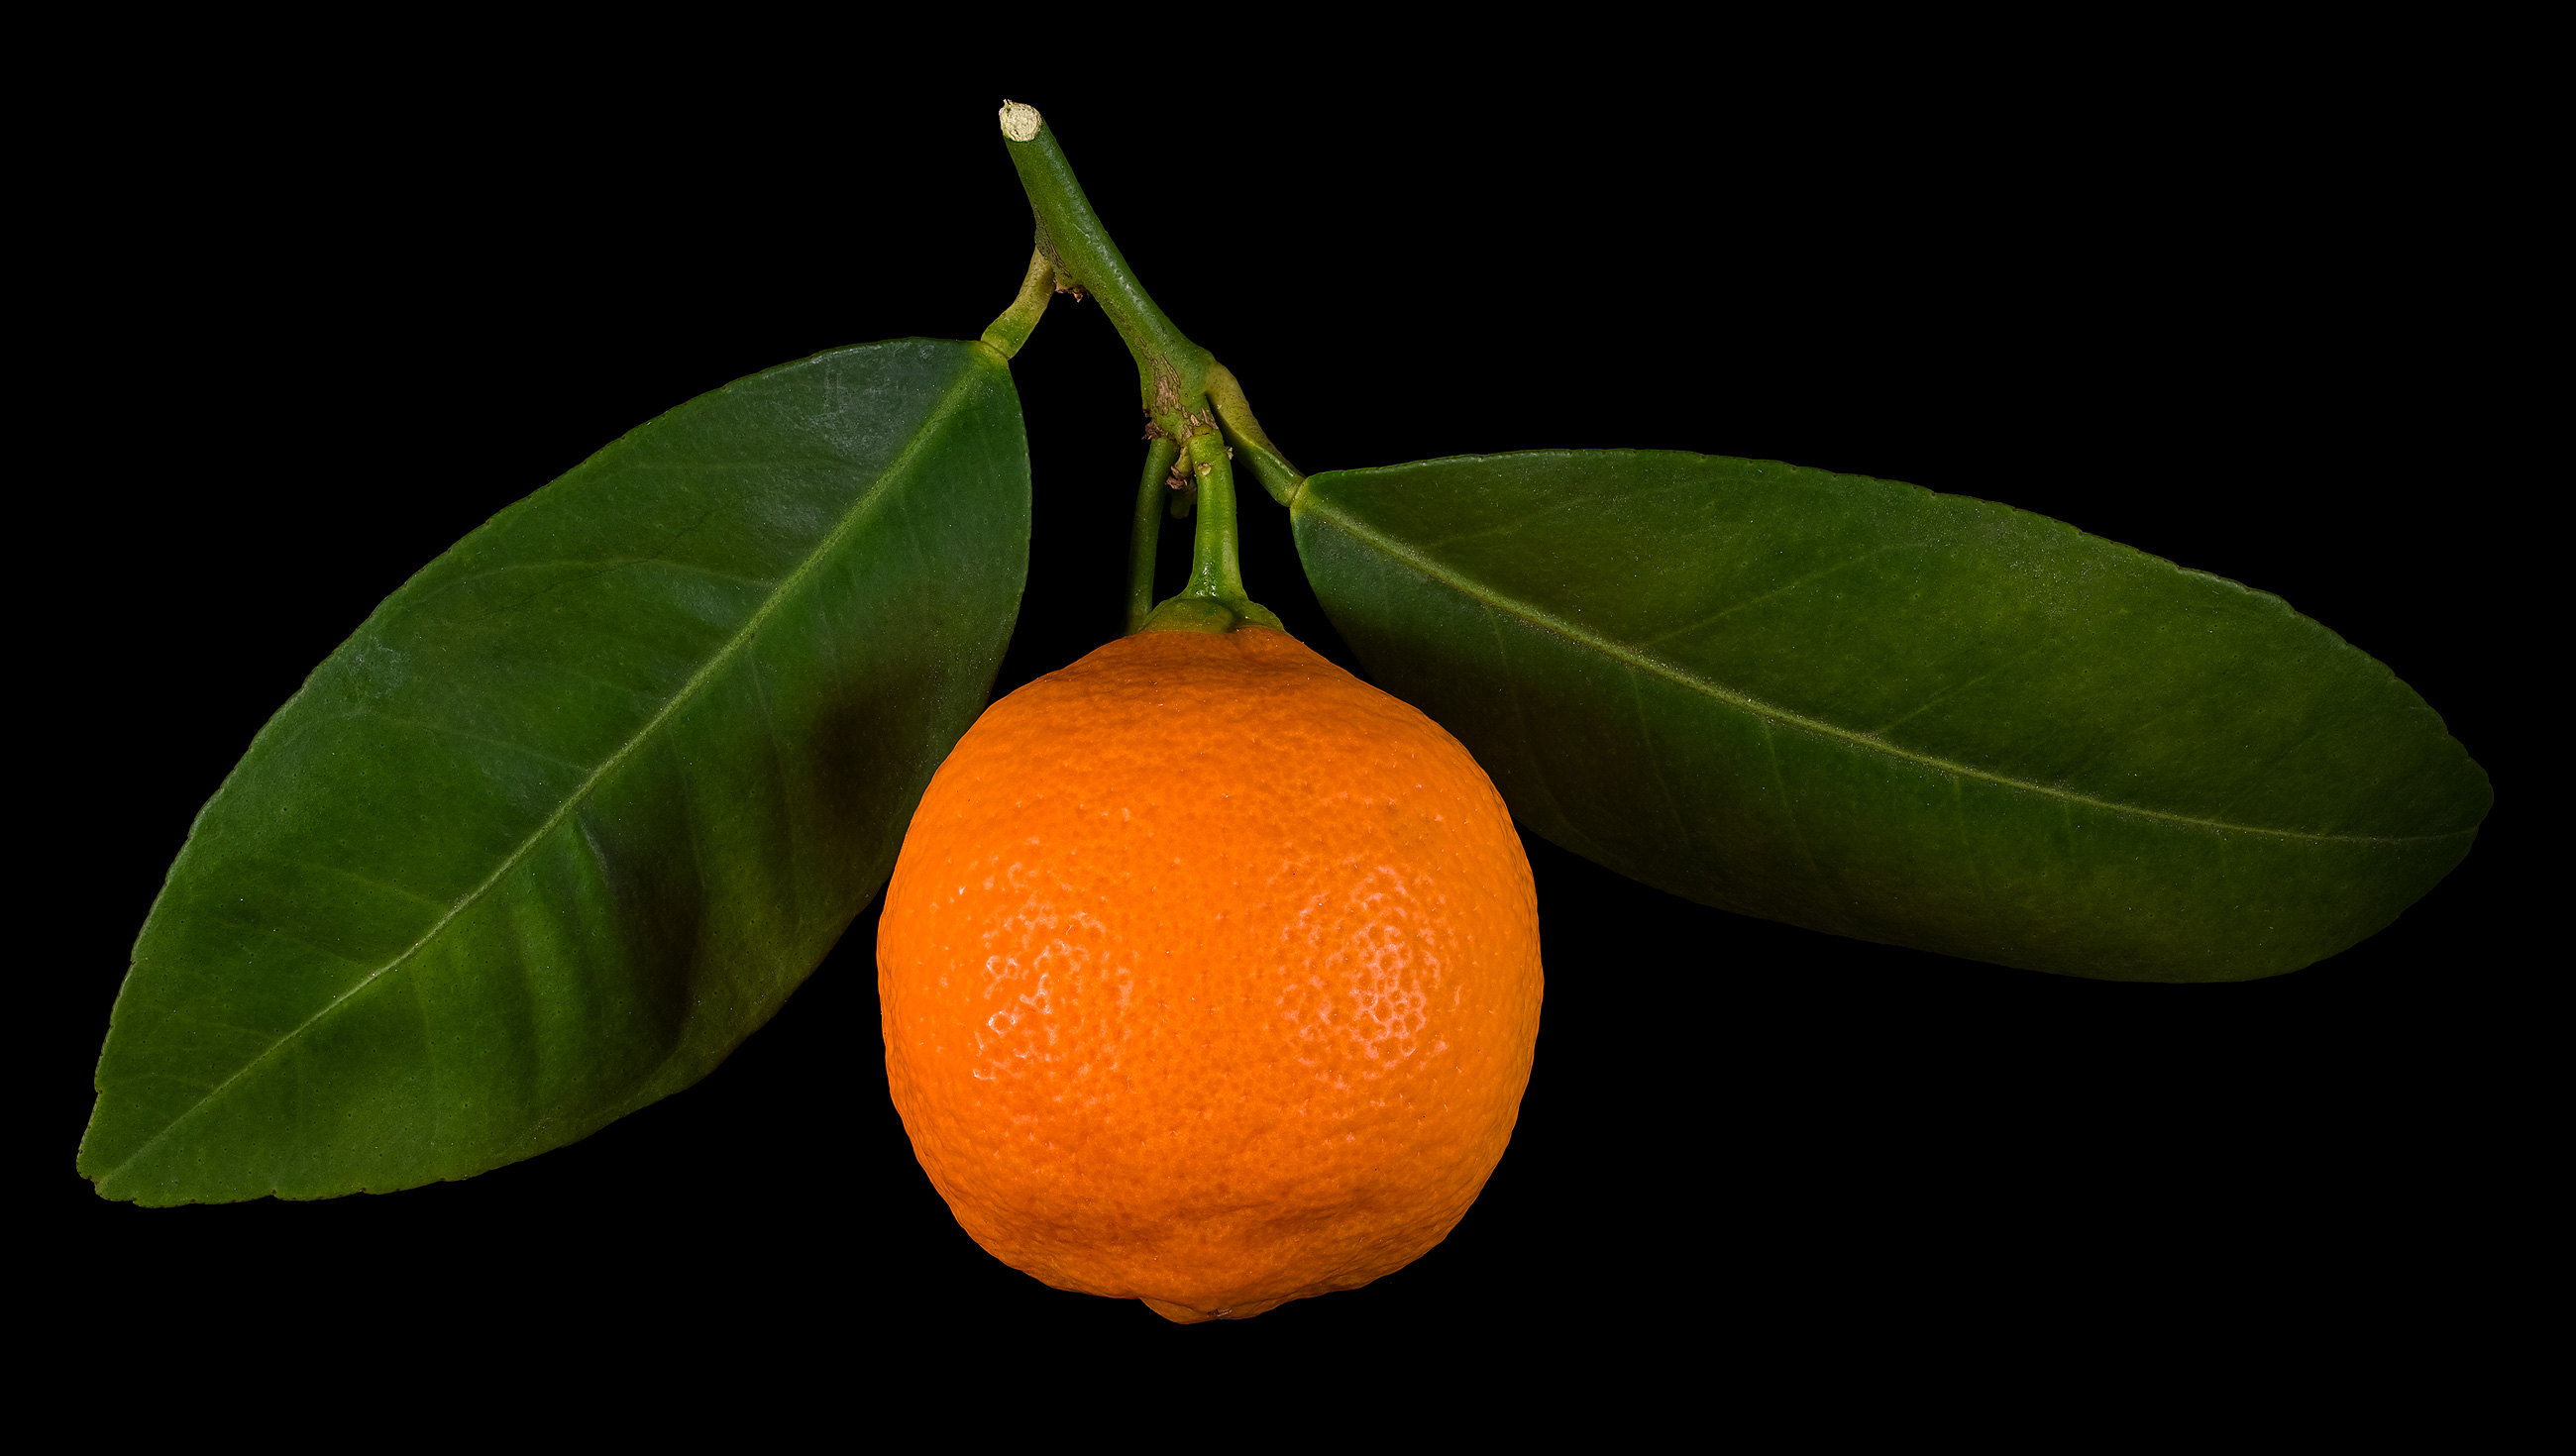 Santa Barbara key lime: Citrus × aurantifolia ‚Santa Barbara‘